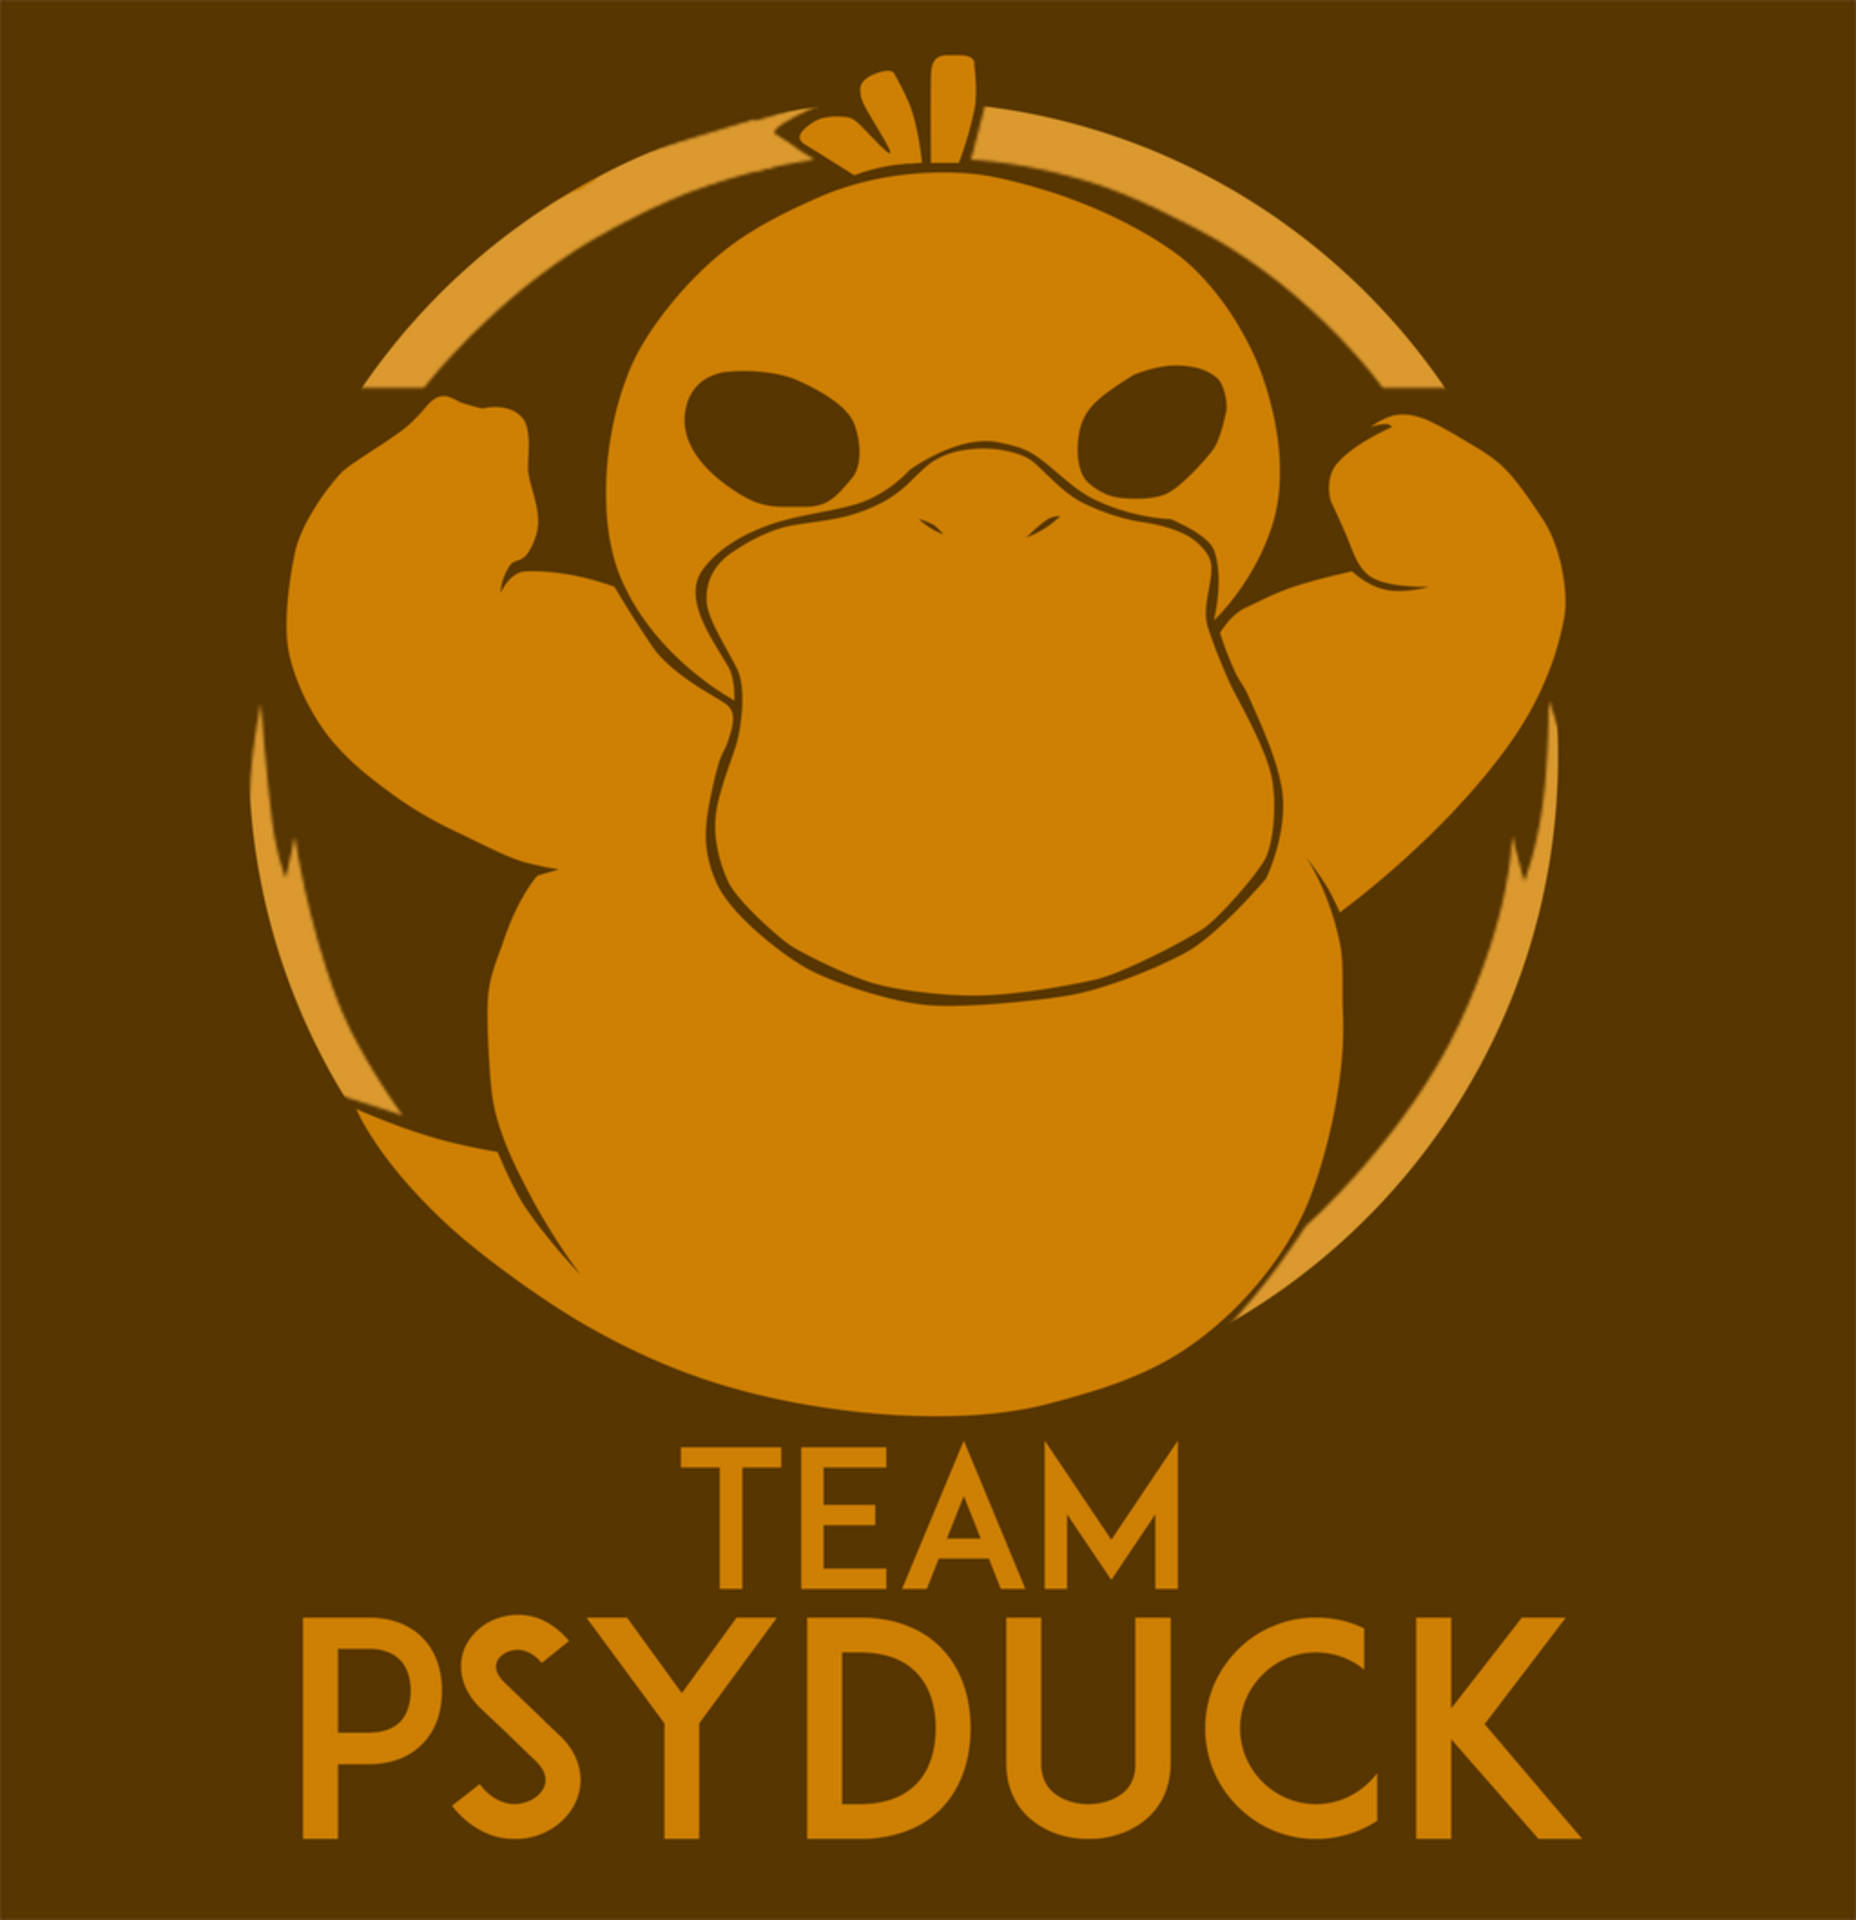 Cool Team Psyduck